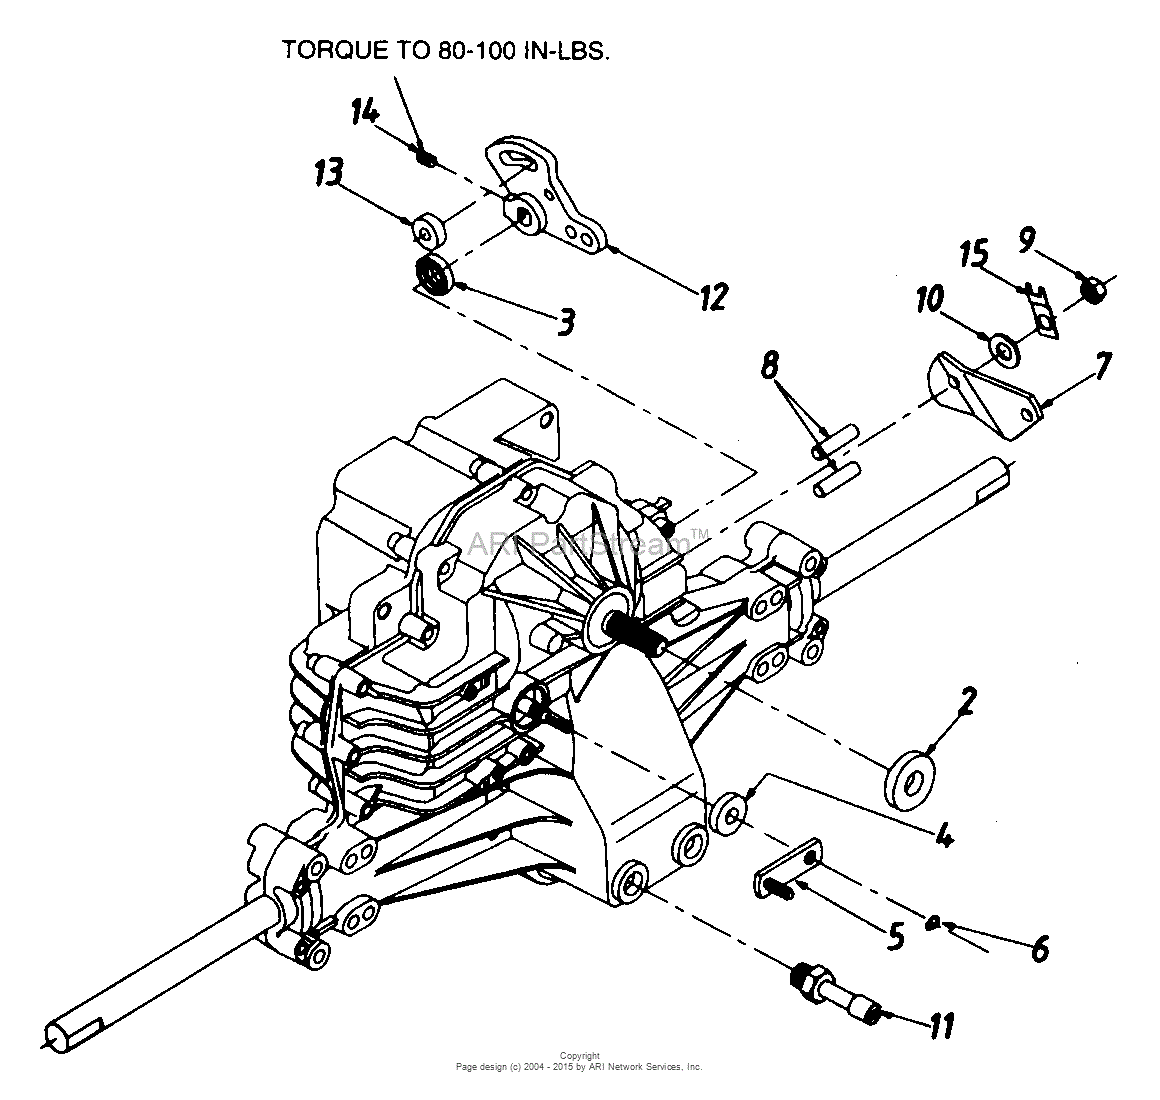 White Lawn Mower Parts Diagram